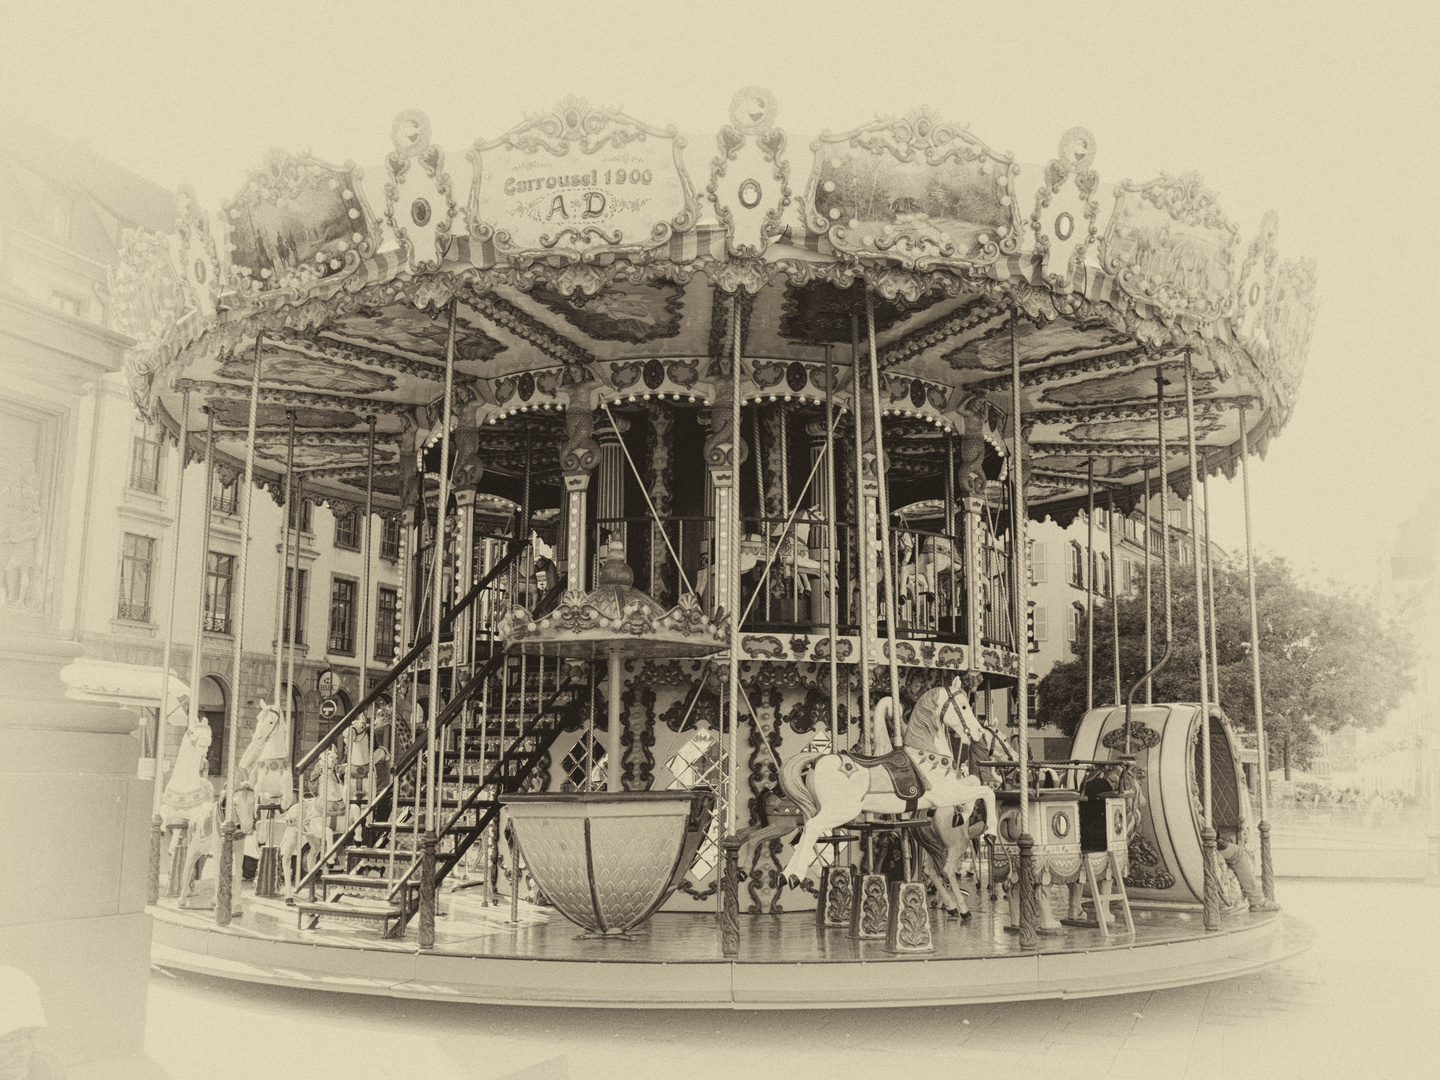 Carrousel 1900